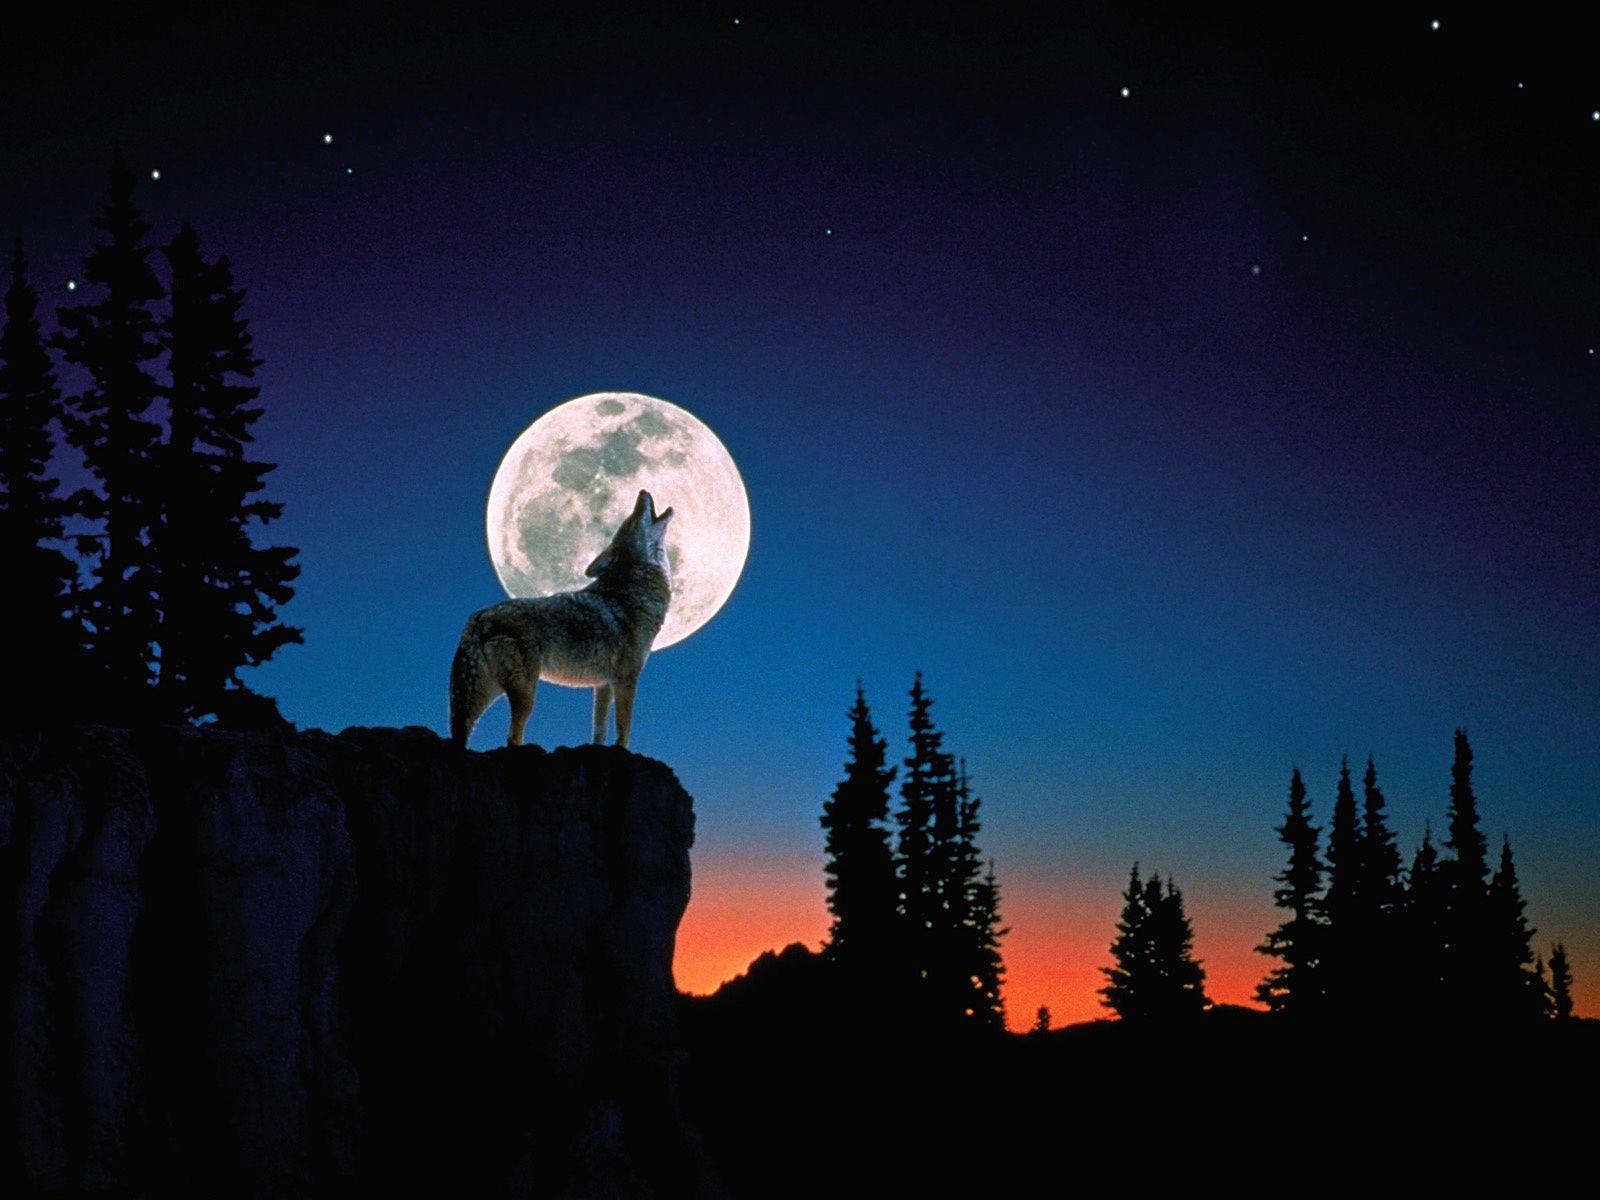 Wallpaper For > Howling Wolf Moon Wallpaper